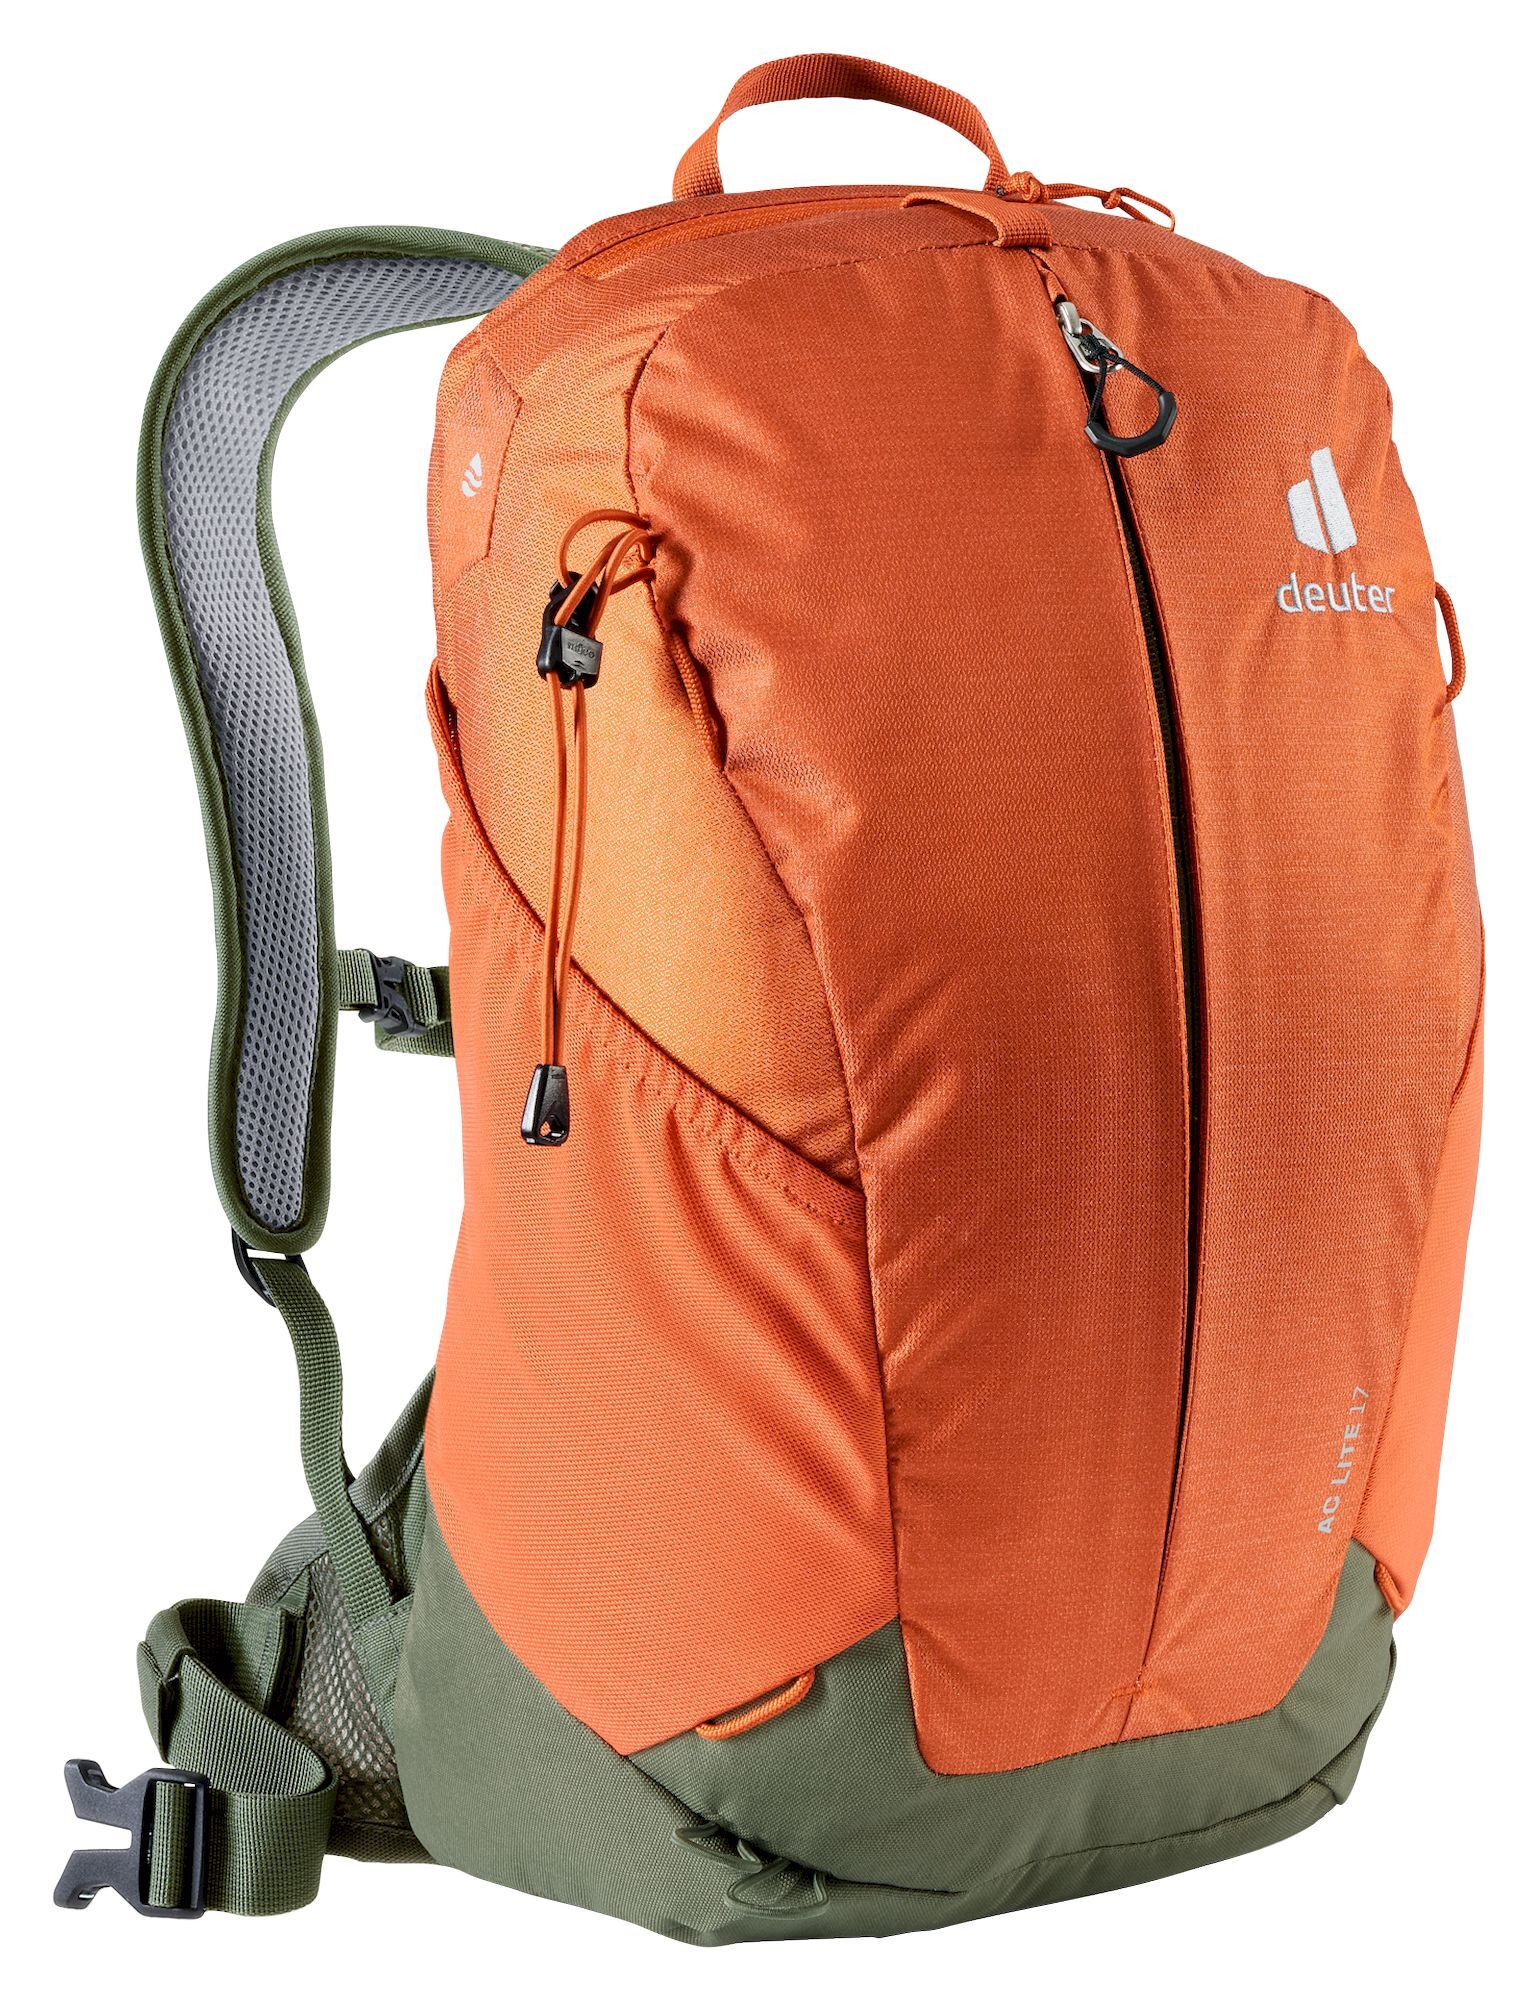 Deuter AC Lite 17 - Walking backpack - Men's